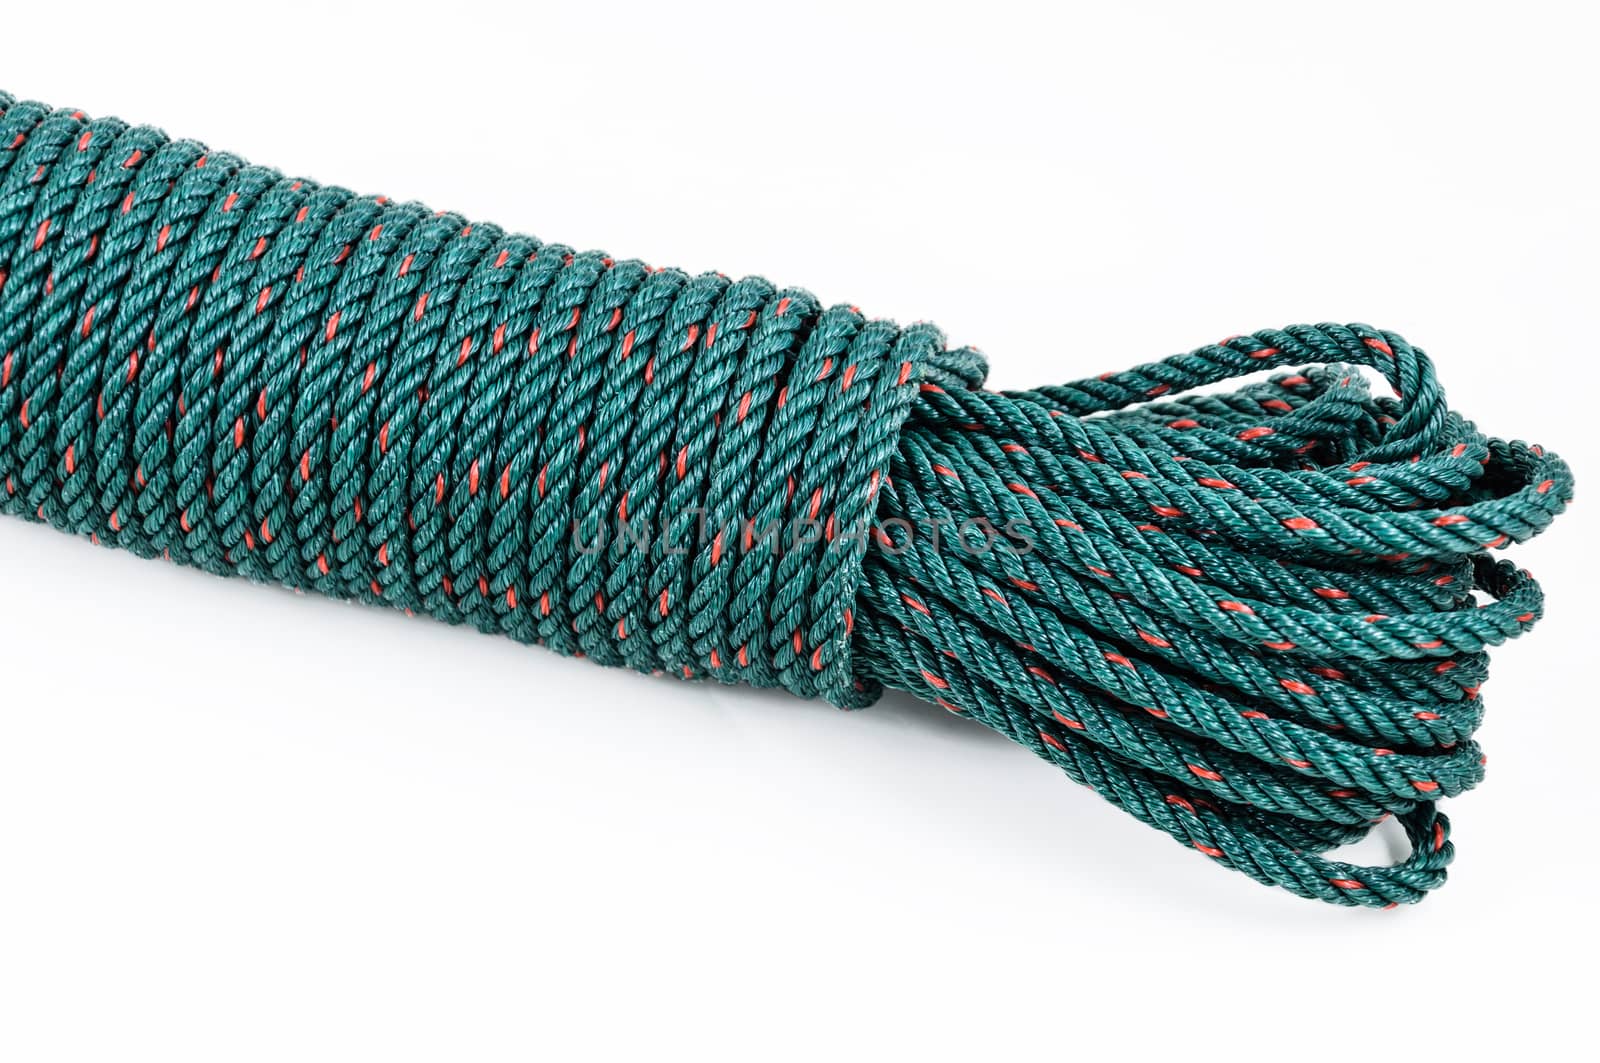 Green nylon rope isolated on white background